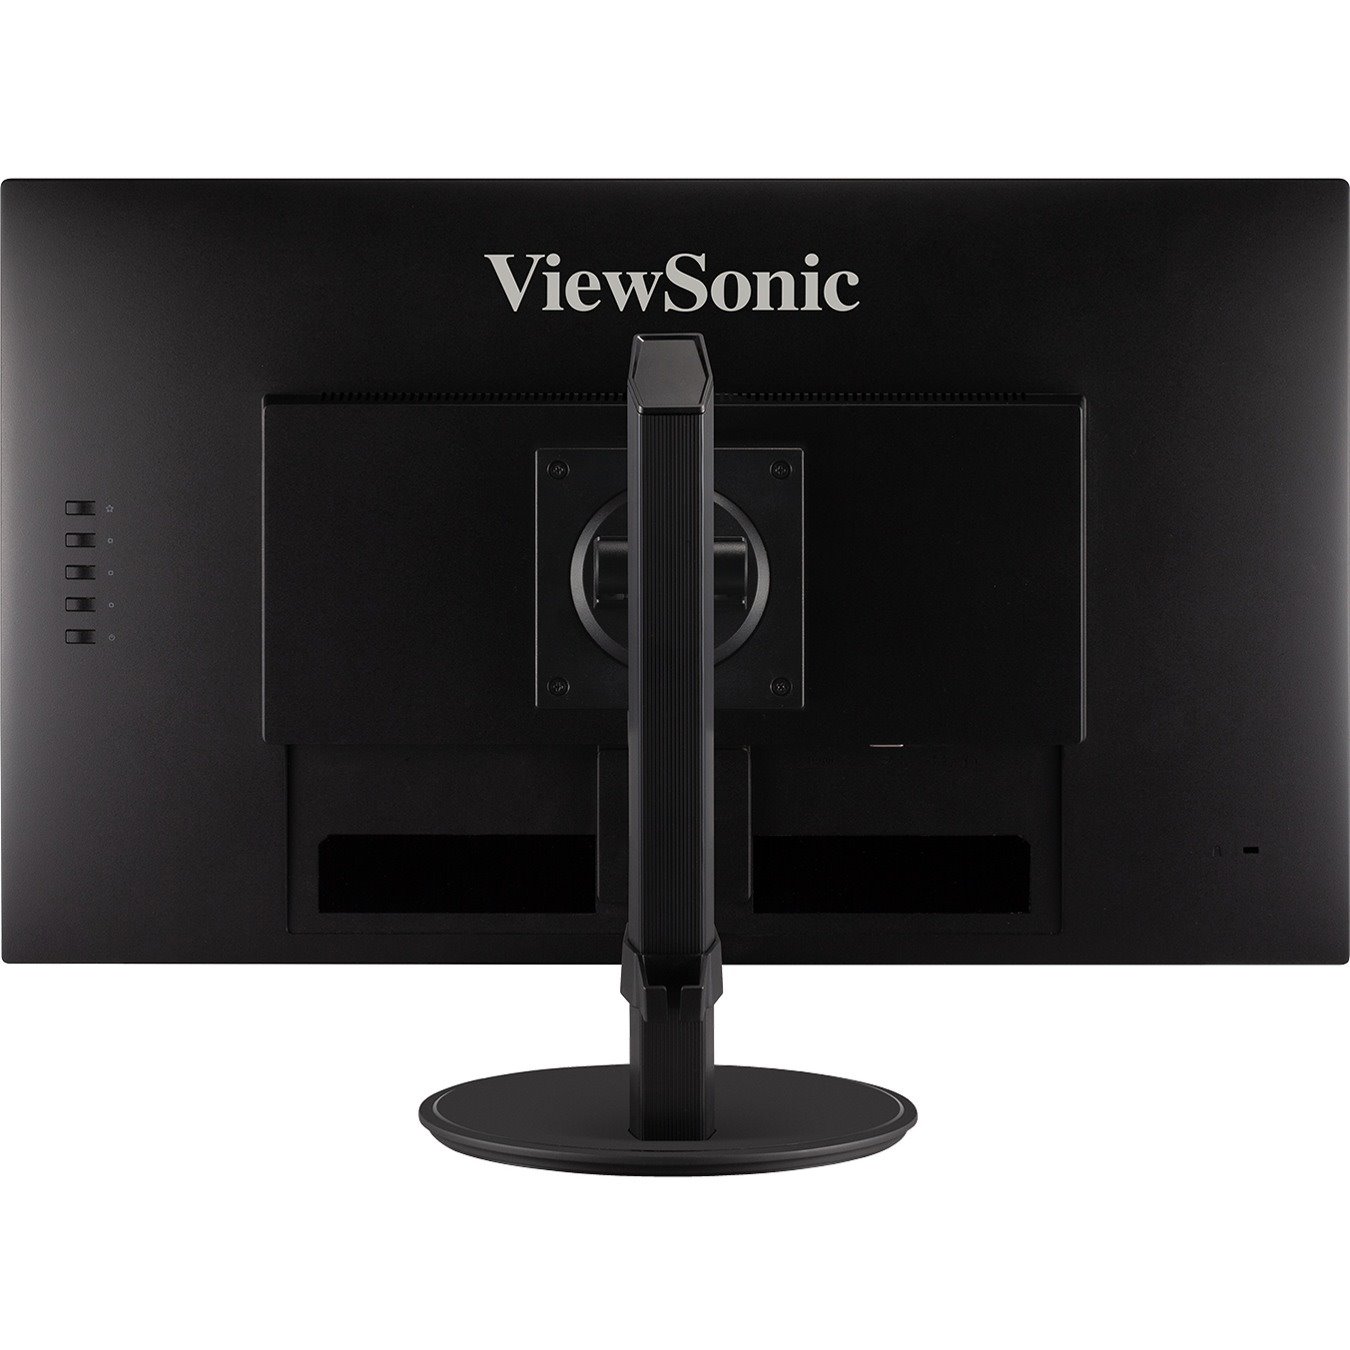 ViewSonic VA2747-MHJ 27 Inch Full HD 1080p Monitor with Advanced Ergonomics, Ultra-Thin Bezel, AMD FreeSync, 100Hz, Eye Care, HDMI, VGA Inputs for Home and Office